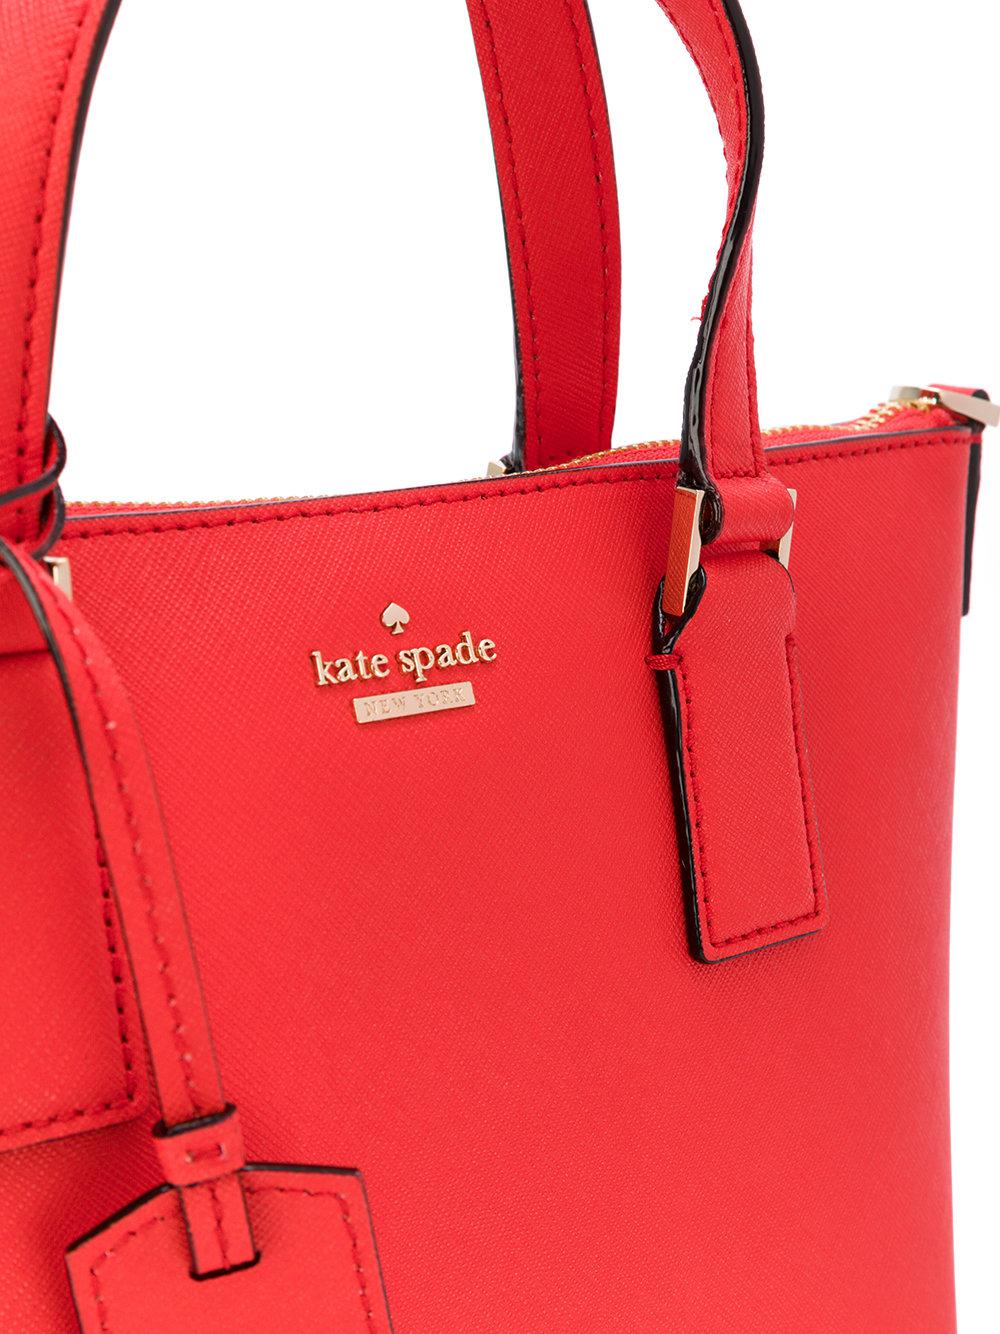 Kate Spade Mini Tote Bag in Red - Lyst